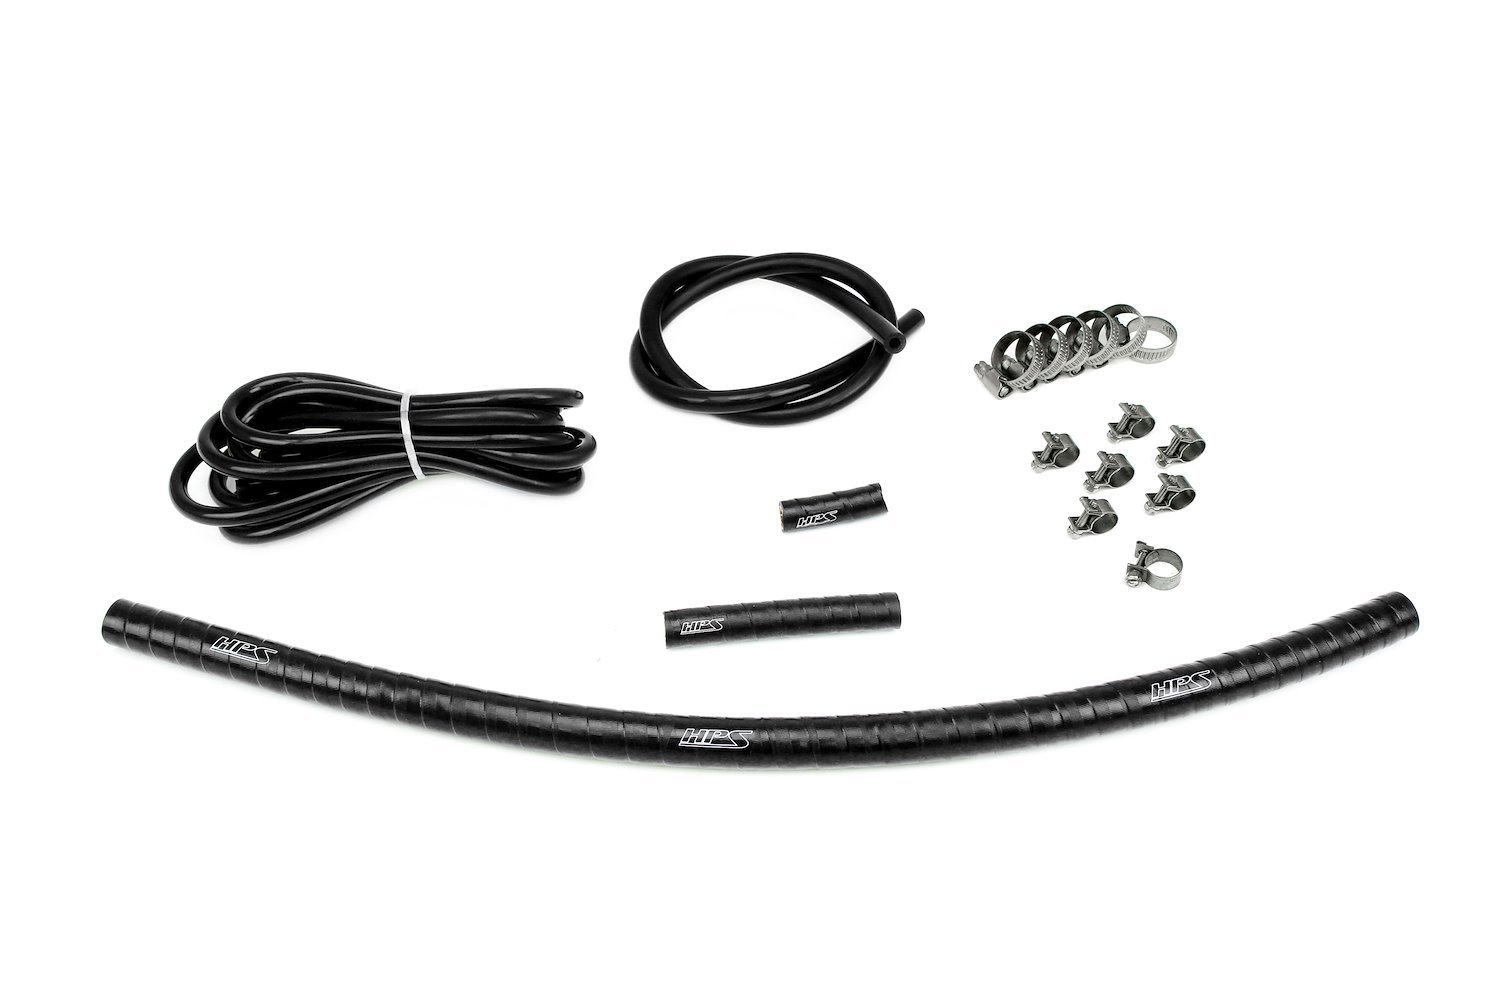 57-2013-BLK Vacuum Hose Kit, High-Temp. & Oil Resistant Silicone, Replaces Rubber Vacuum & Breather Hose